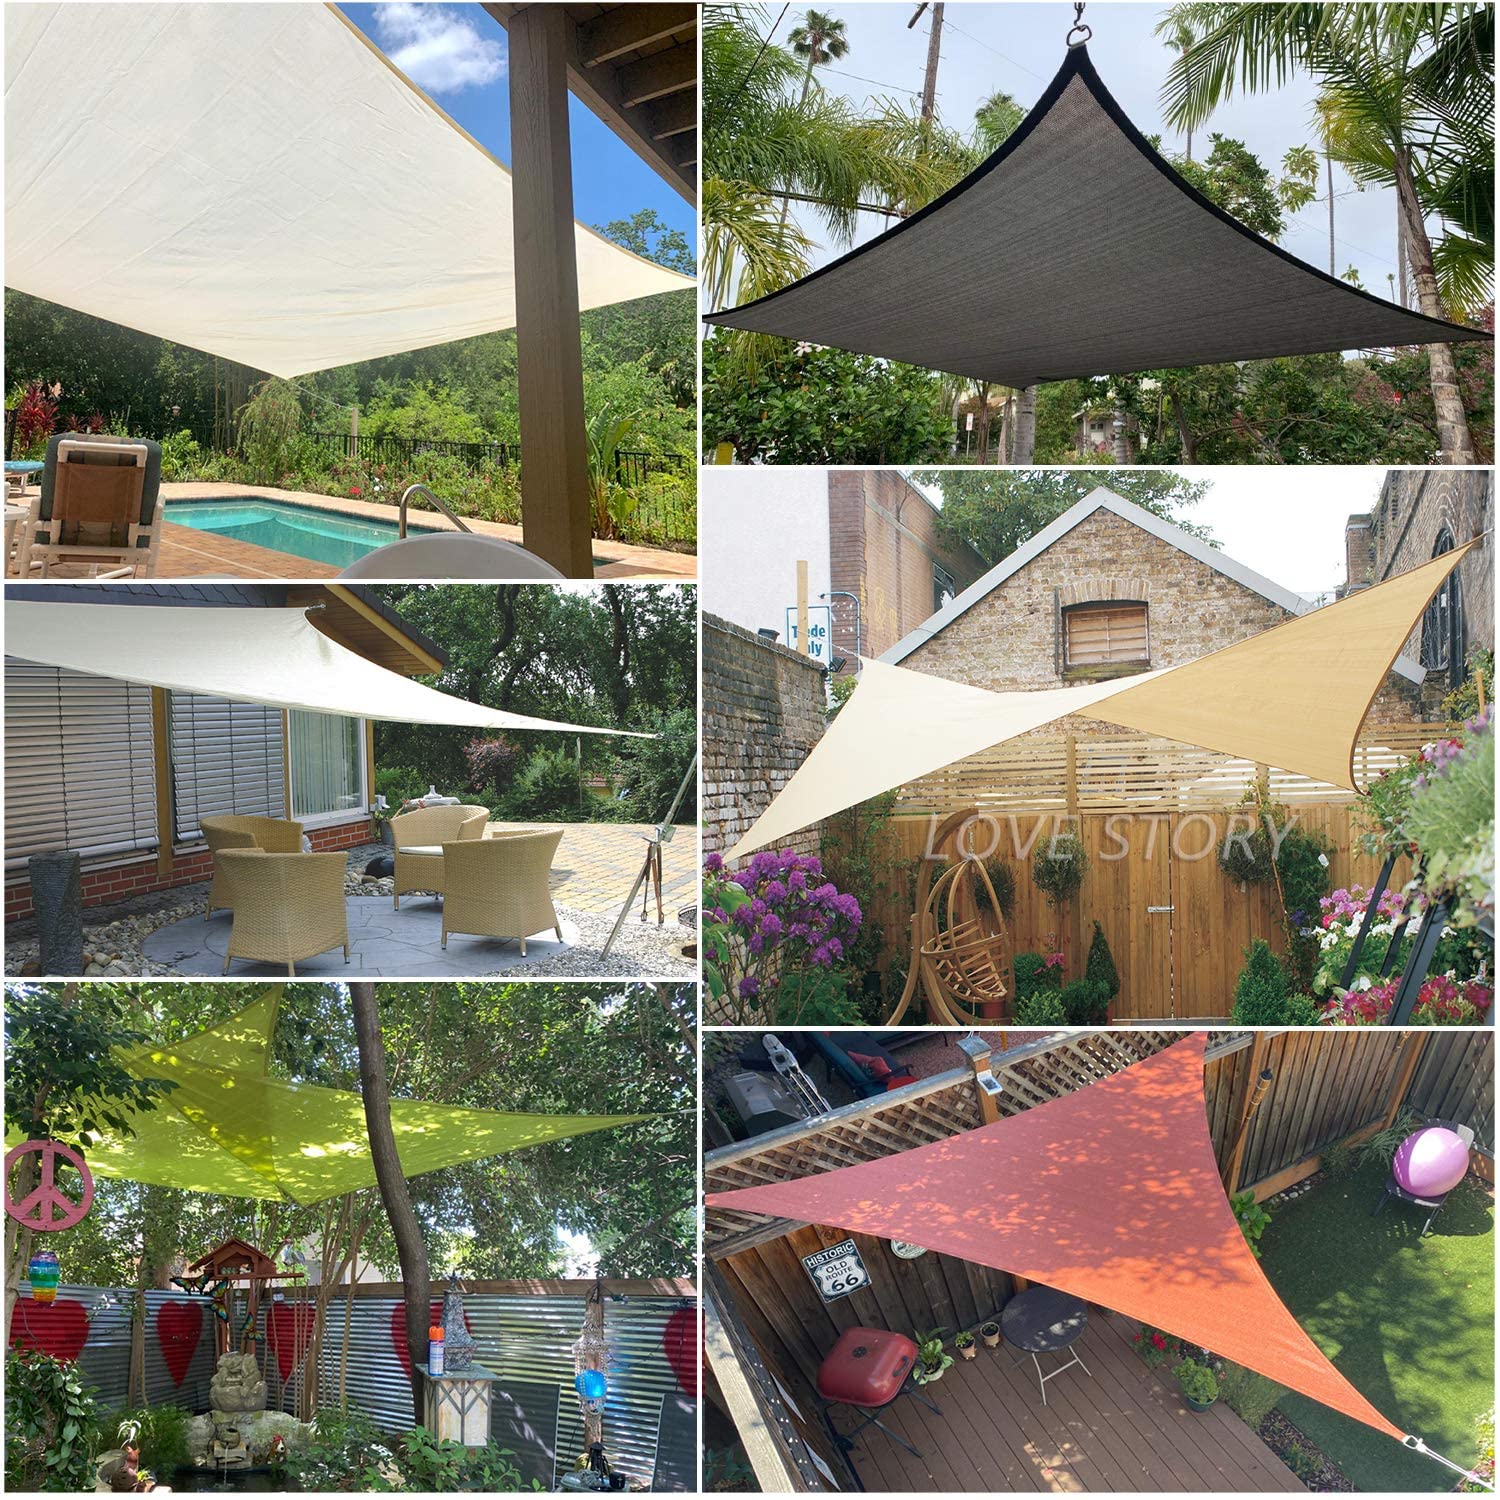 Custom Size Outdoor Sun Shade Sail Waterproof Canopy UV Block for Patio,Garden,Backyard Lawn KGORGE Store